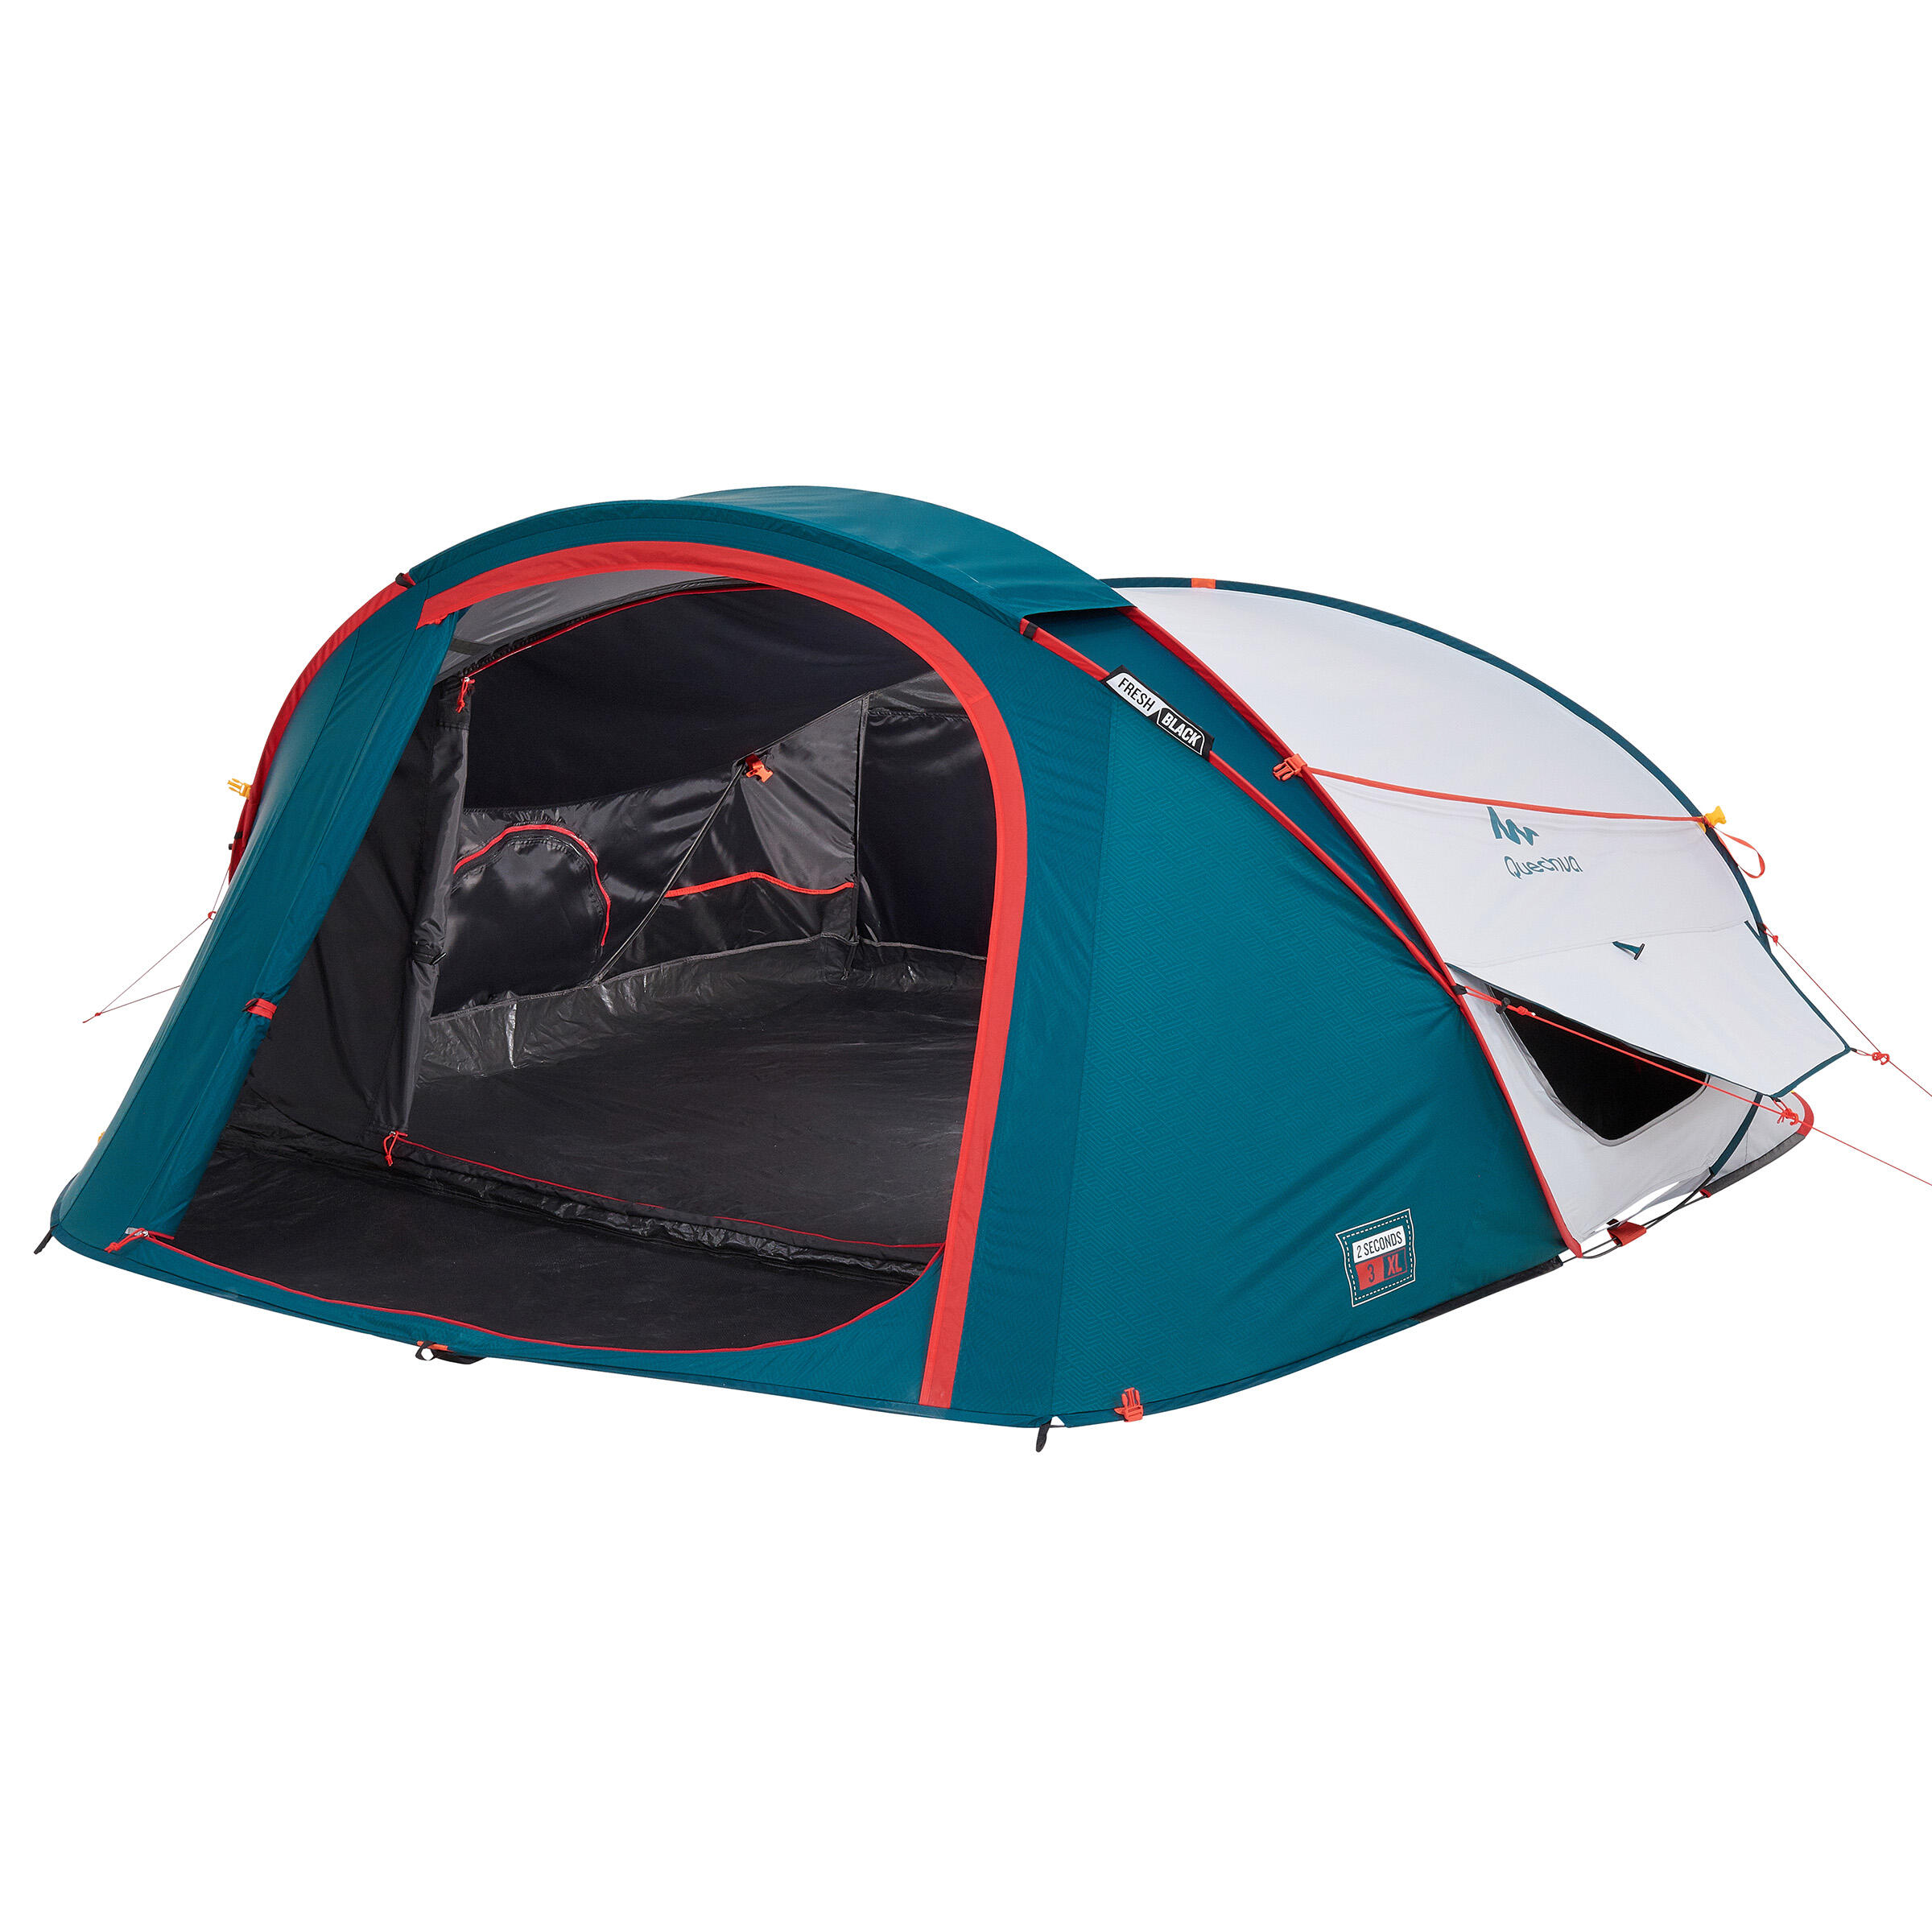 Cort camping 2 SECONDS FRESH&BLACK XL 3 persoane decathlon.ro